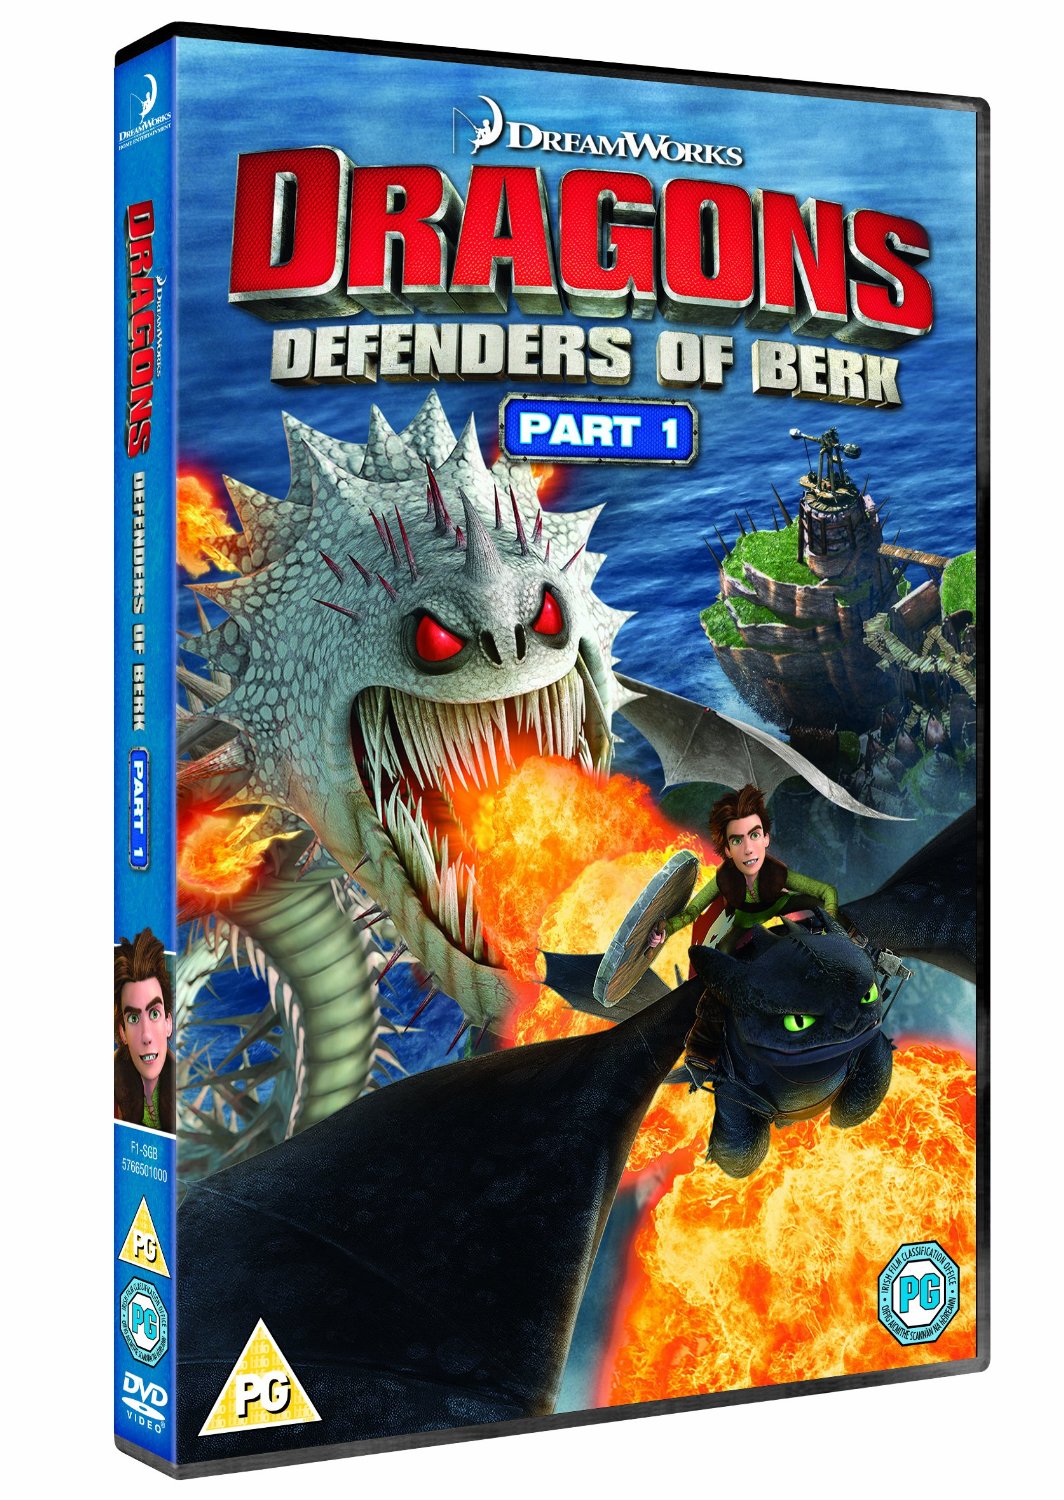 DreamWorks Dragons Subtitles - Movies Subtitles